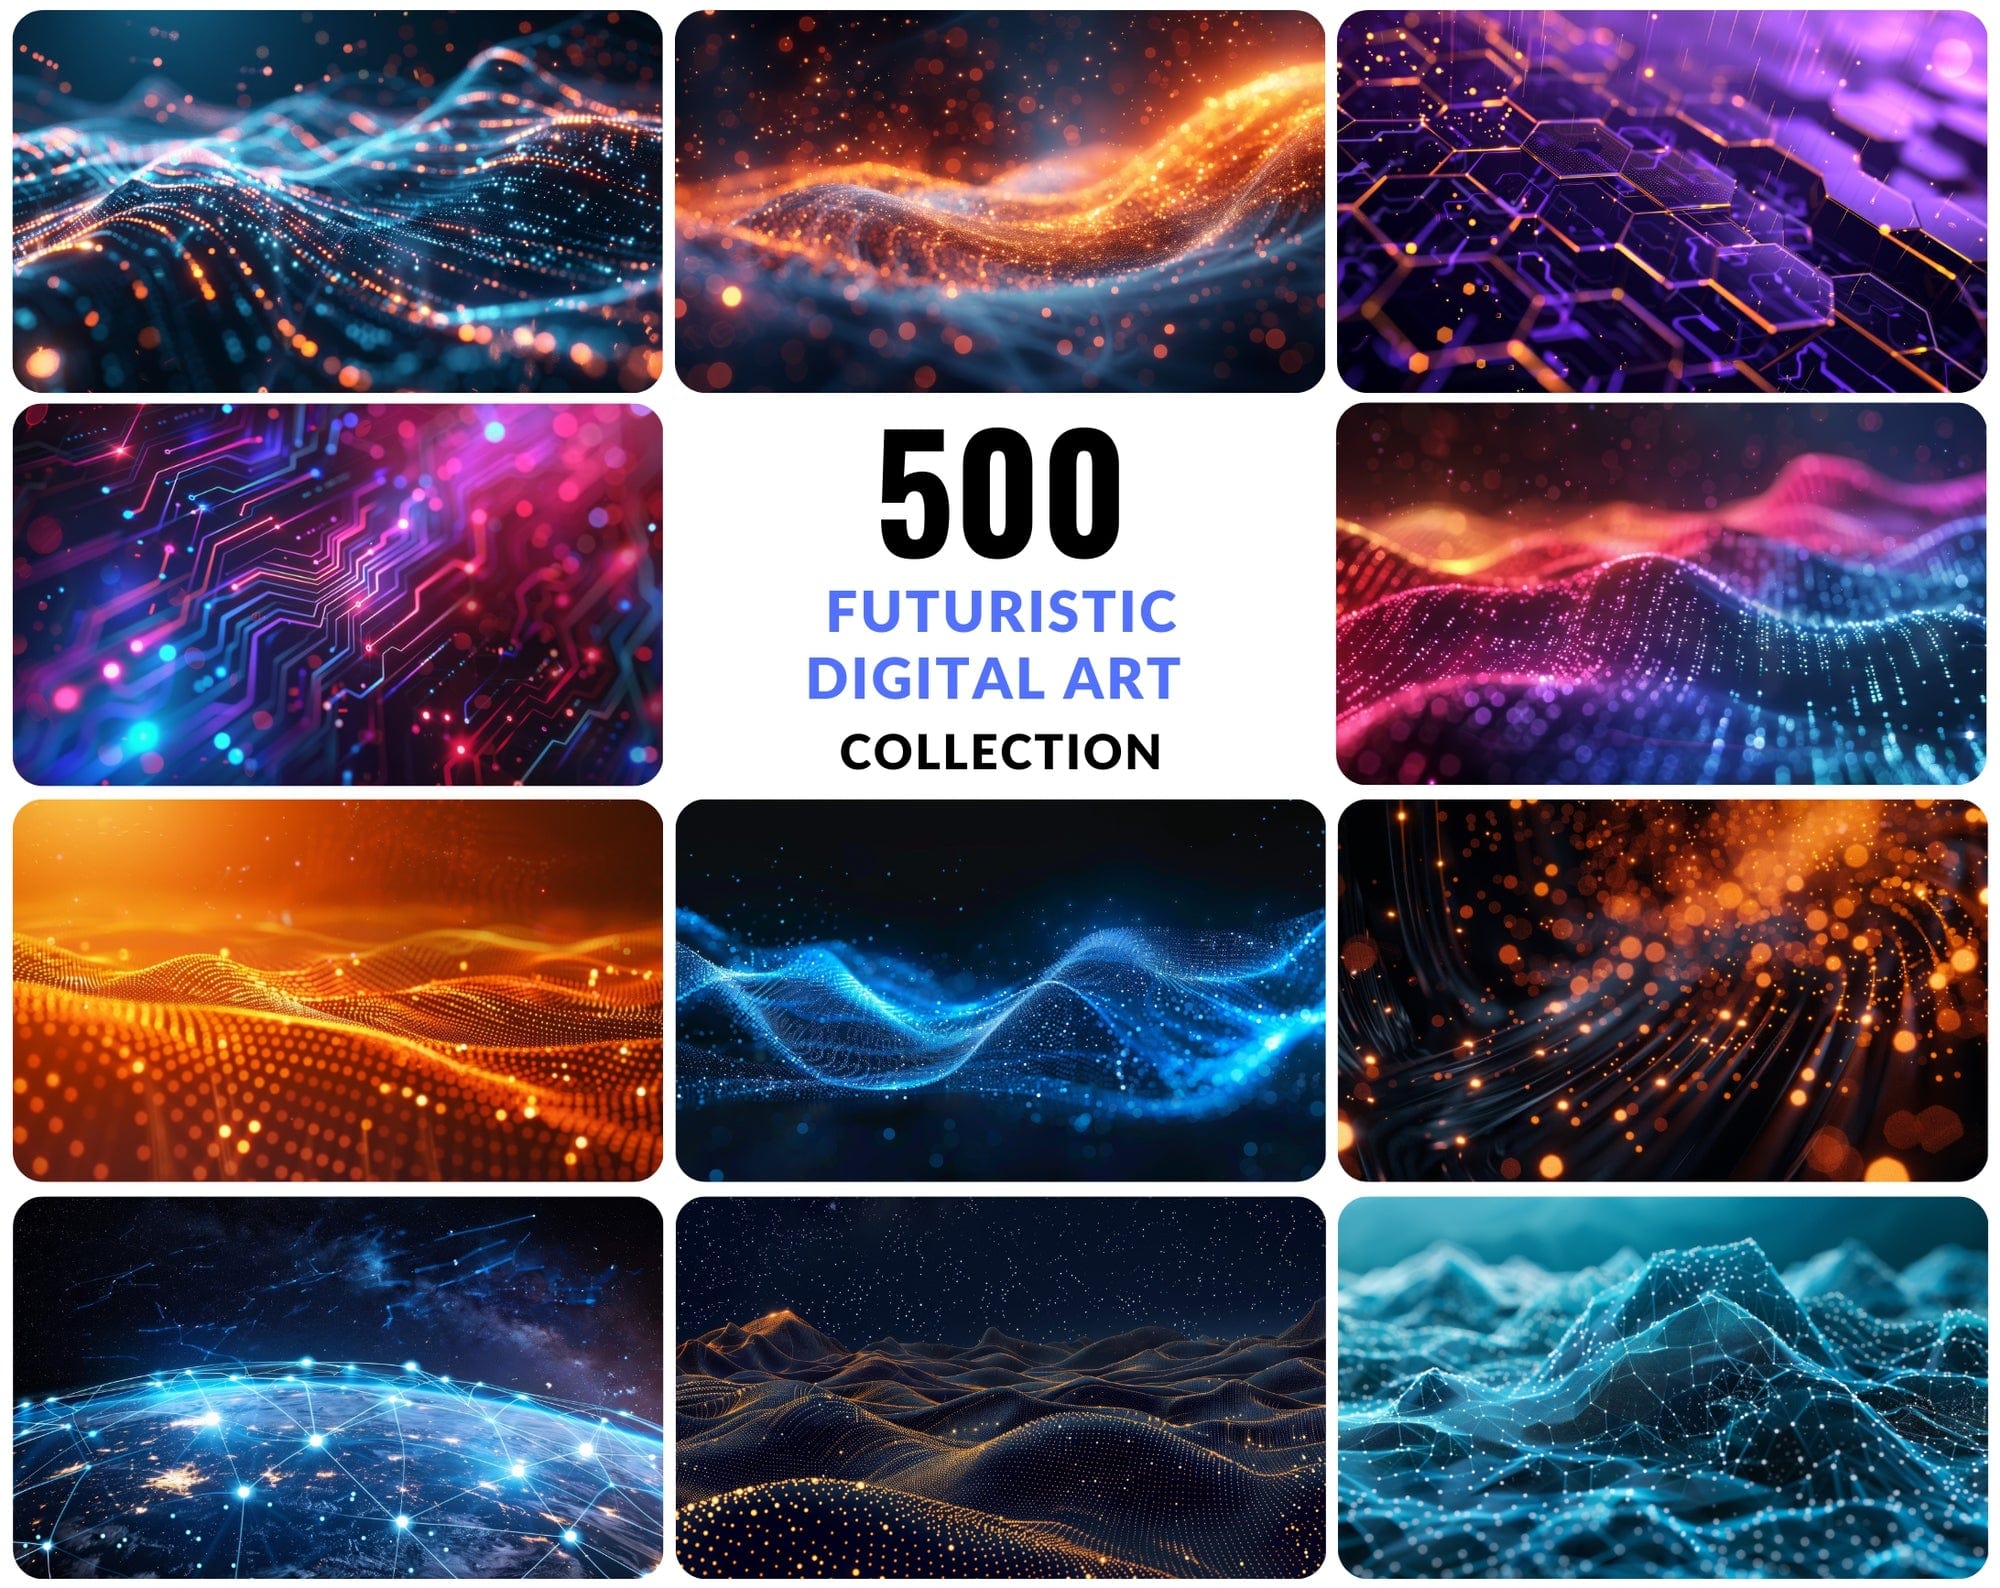 Futuristic Digital Art Collection - 500 Tech Related Images Digital Download Sumobundle